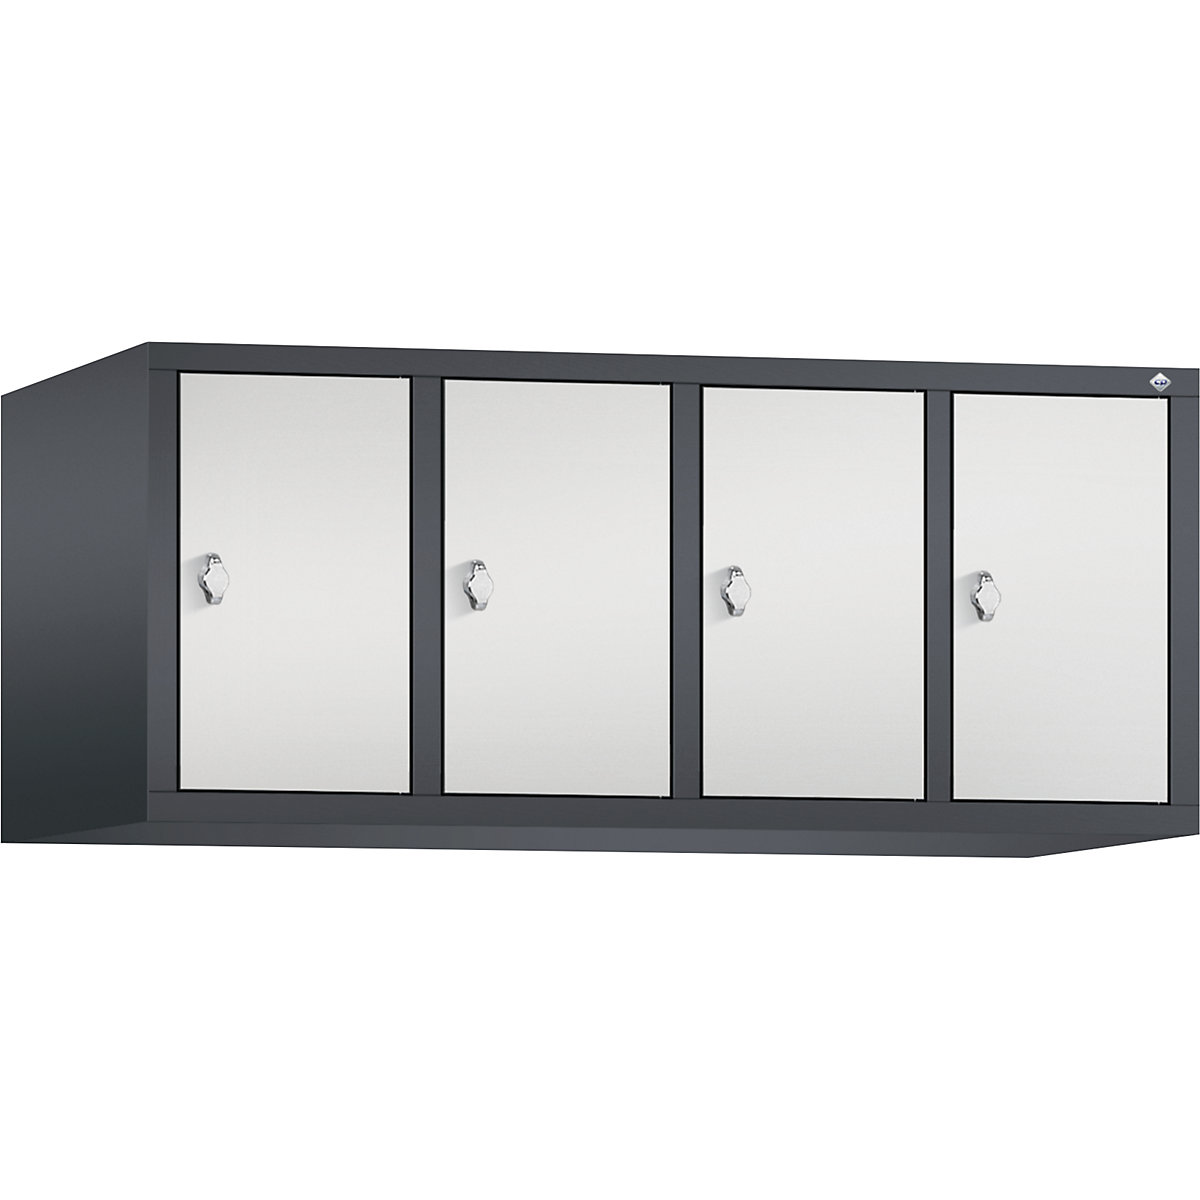 C+P – Altillo CLASSIC, 4 compartimentos, anchura de compartimento 300 mm, gris negruzco / gris luminoso